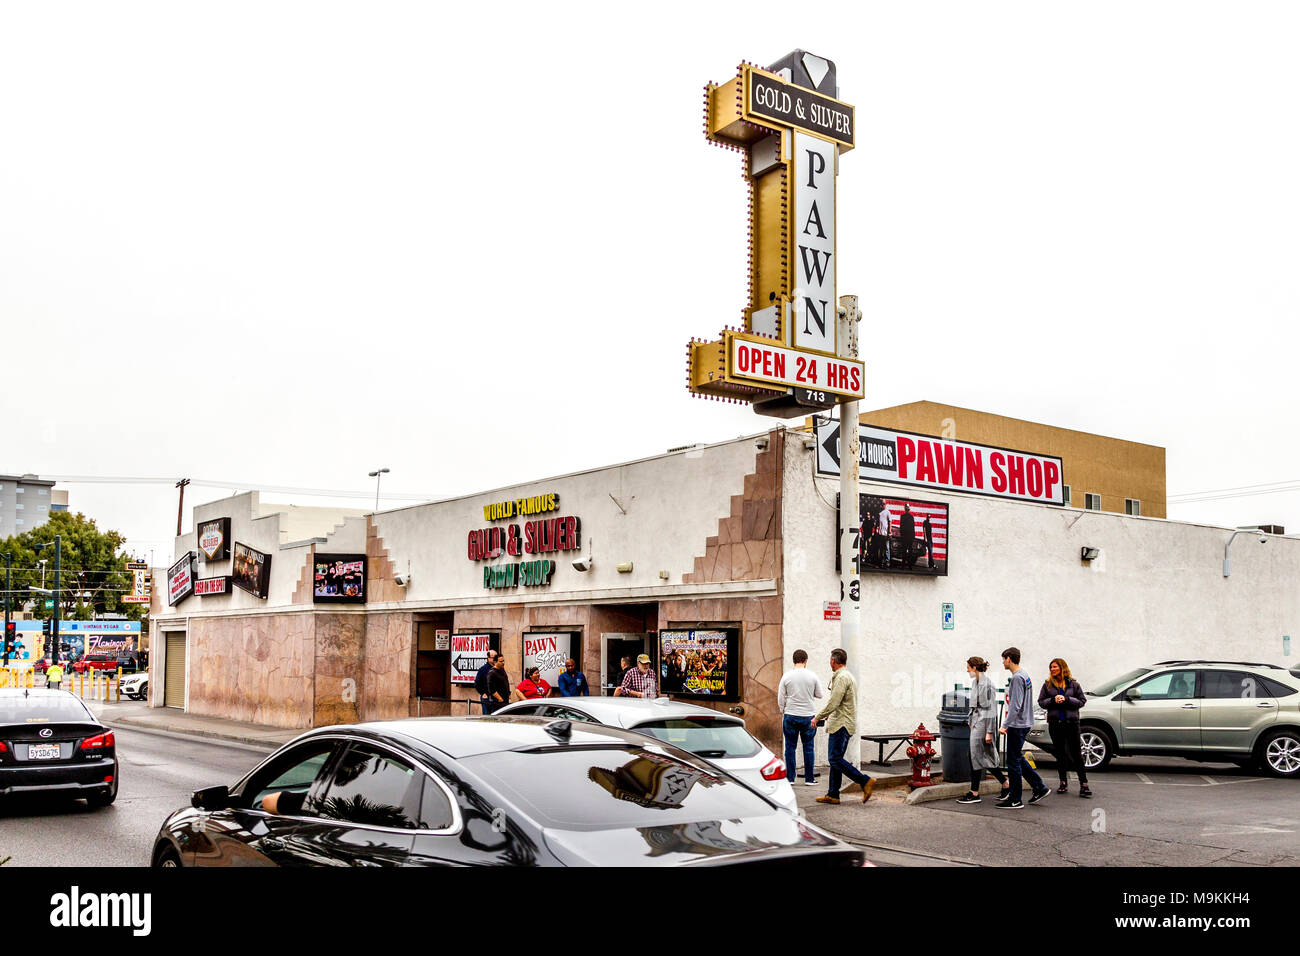 Gold and Siver Pawn Shop, S Las Vegas Blvd. Boulevard Stock Photo